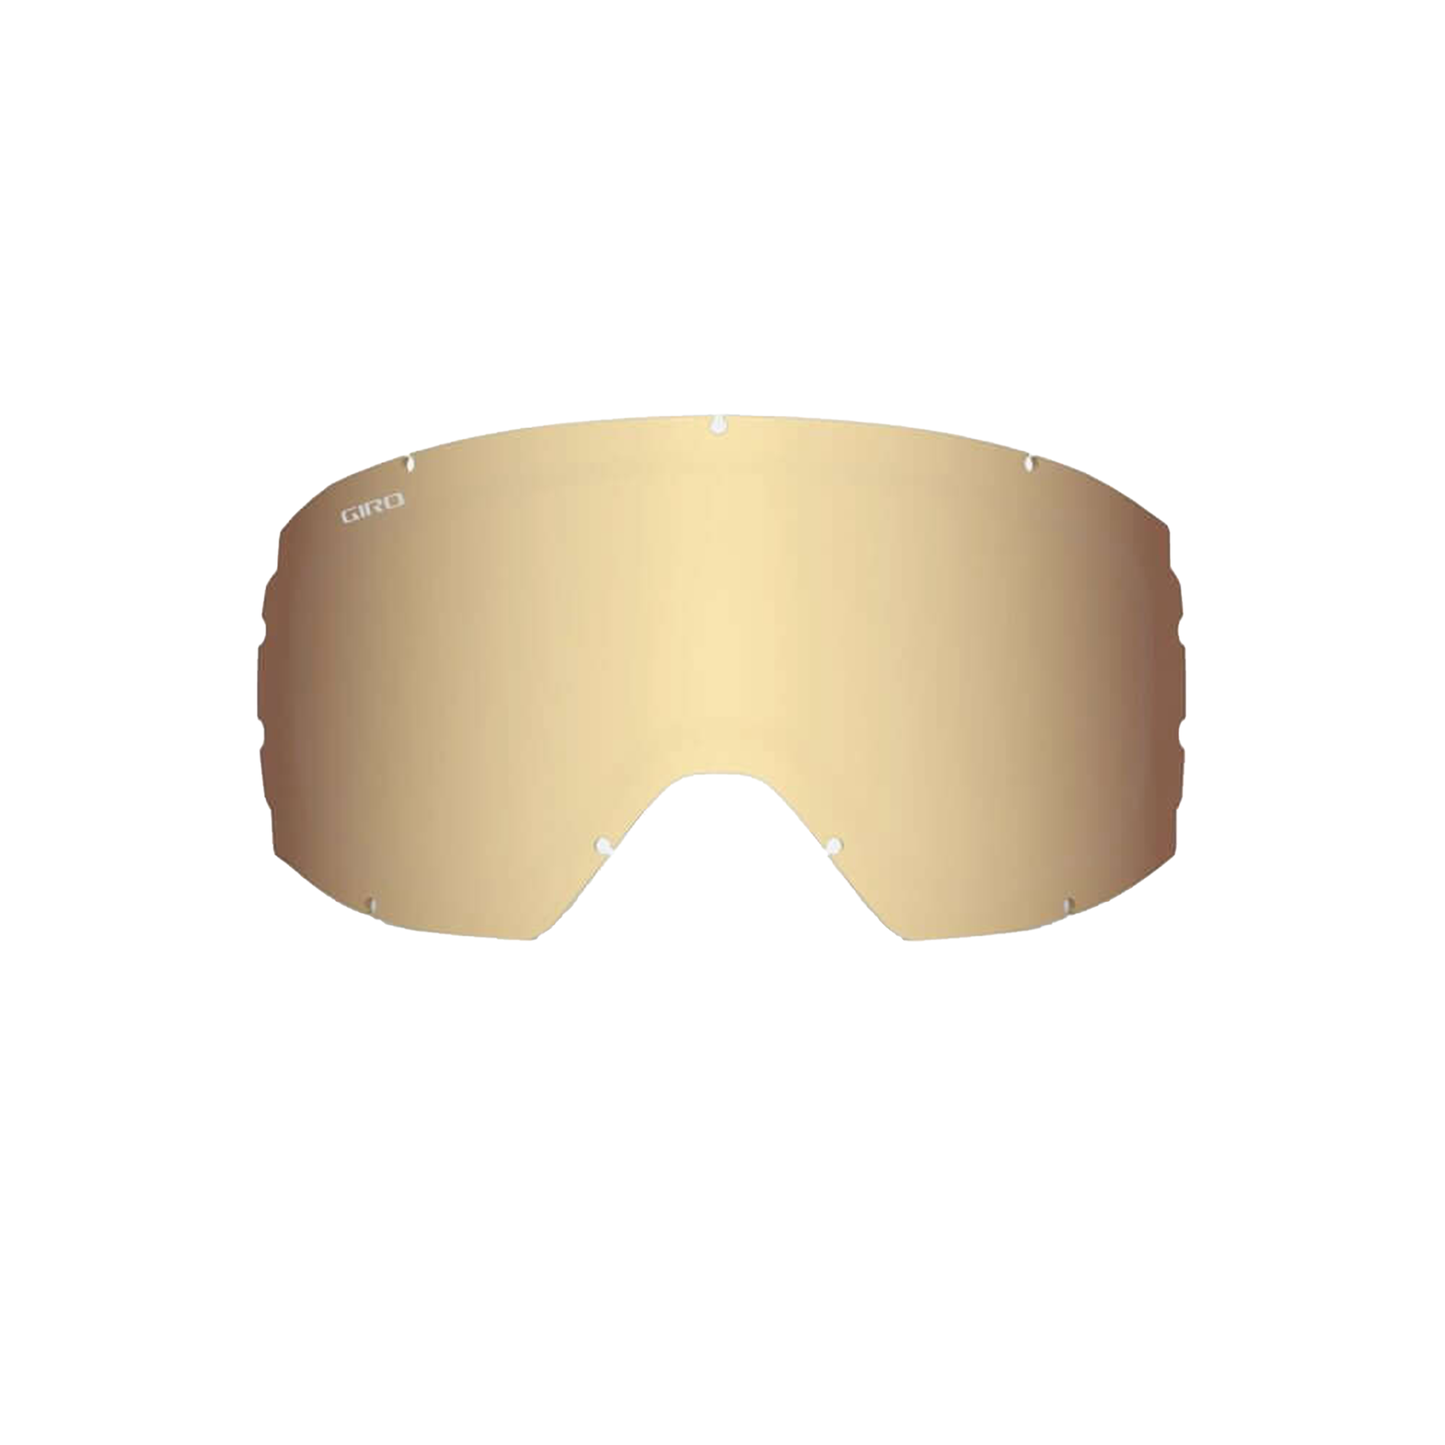 Giro Scan/Gaze Replacement Lens Amber Gold Lenses